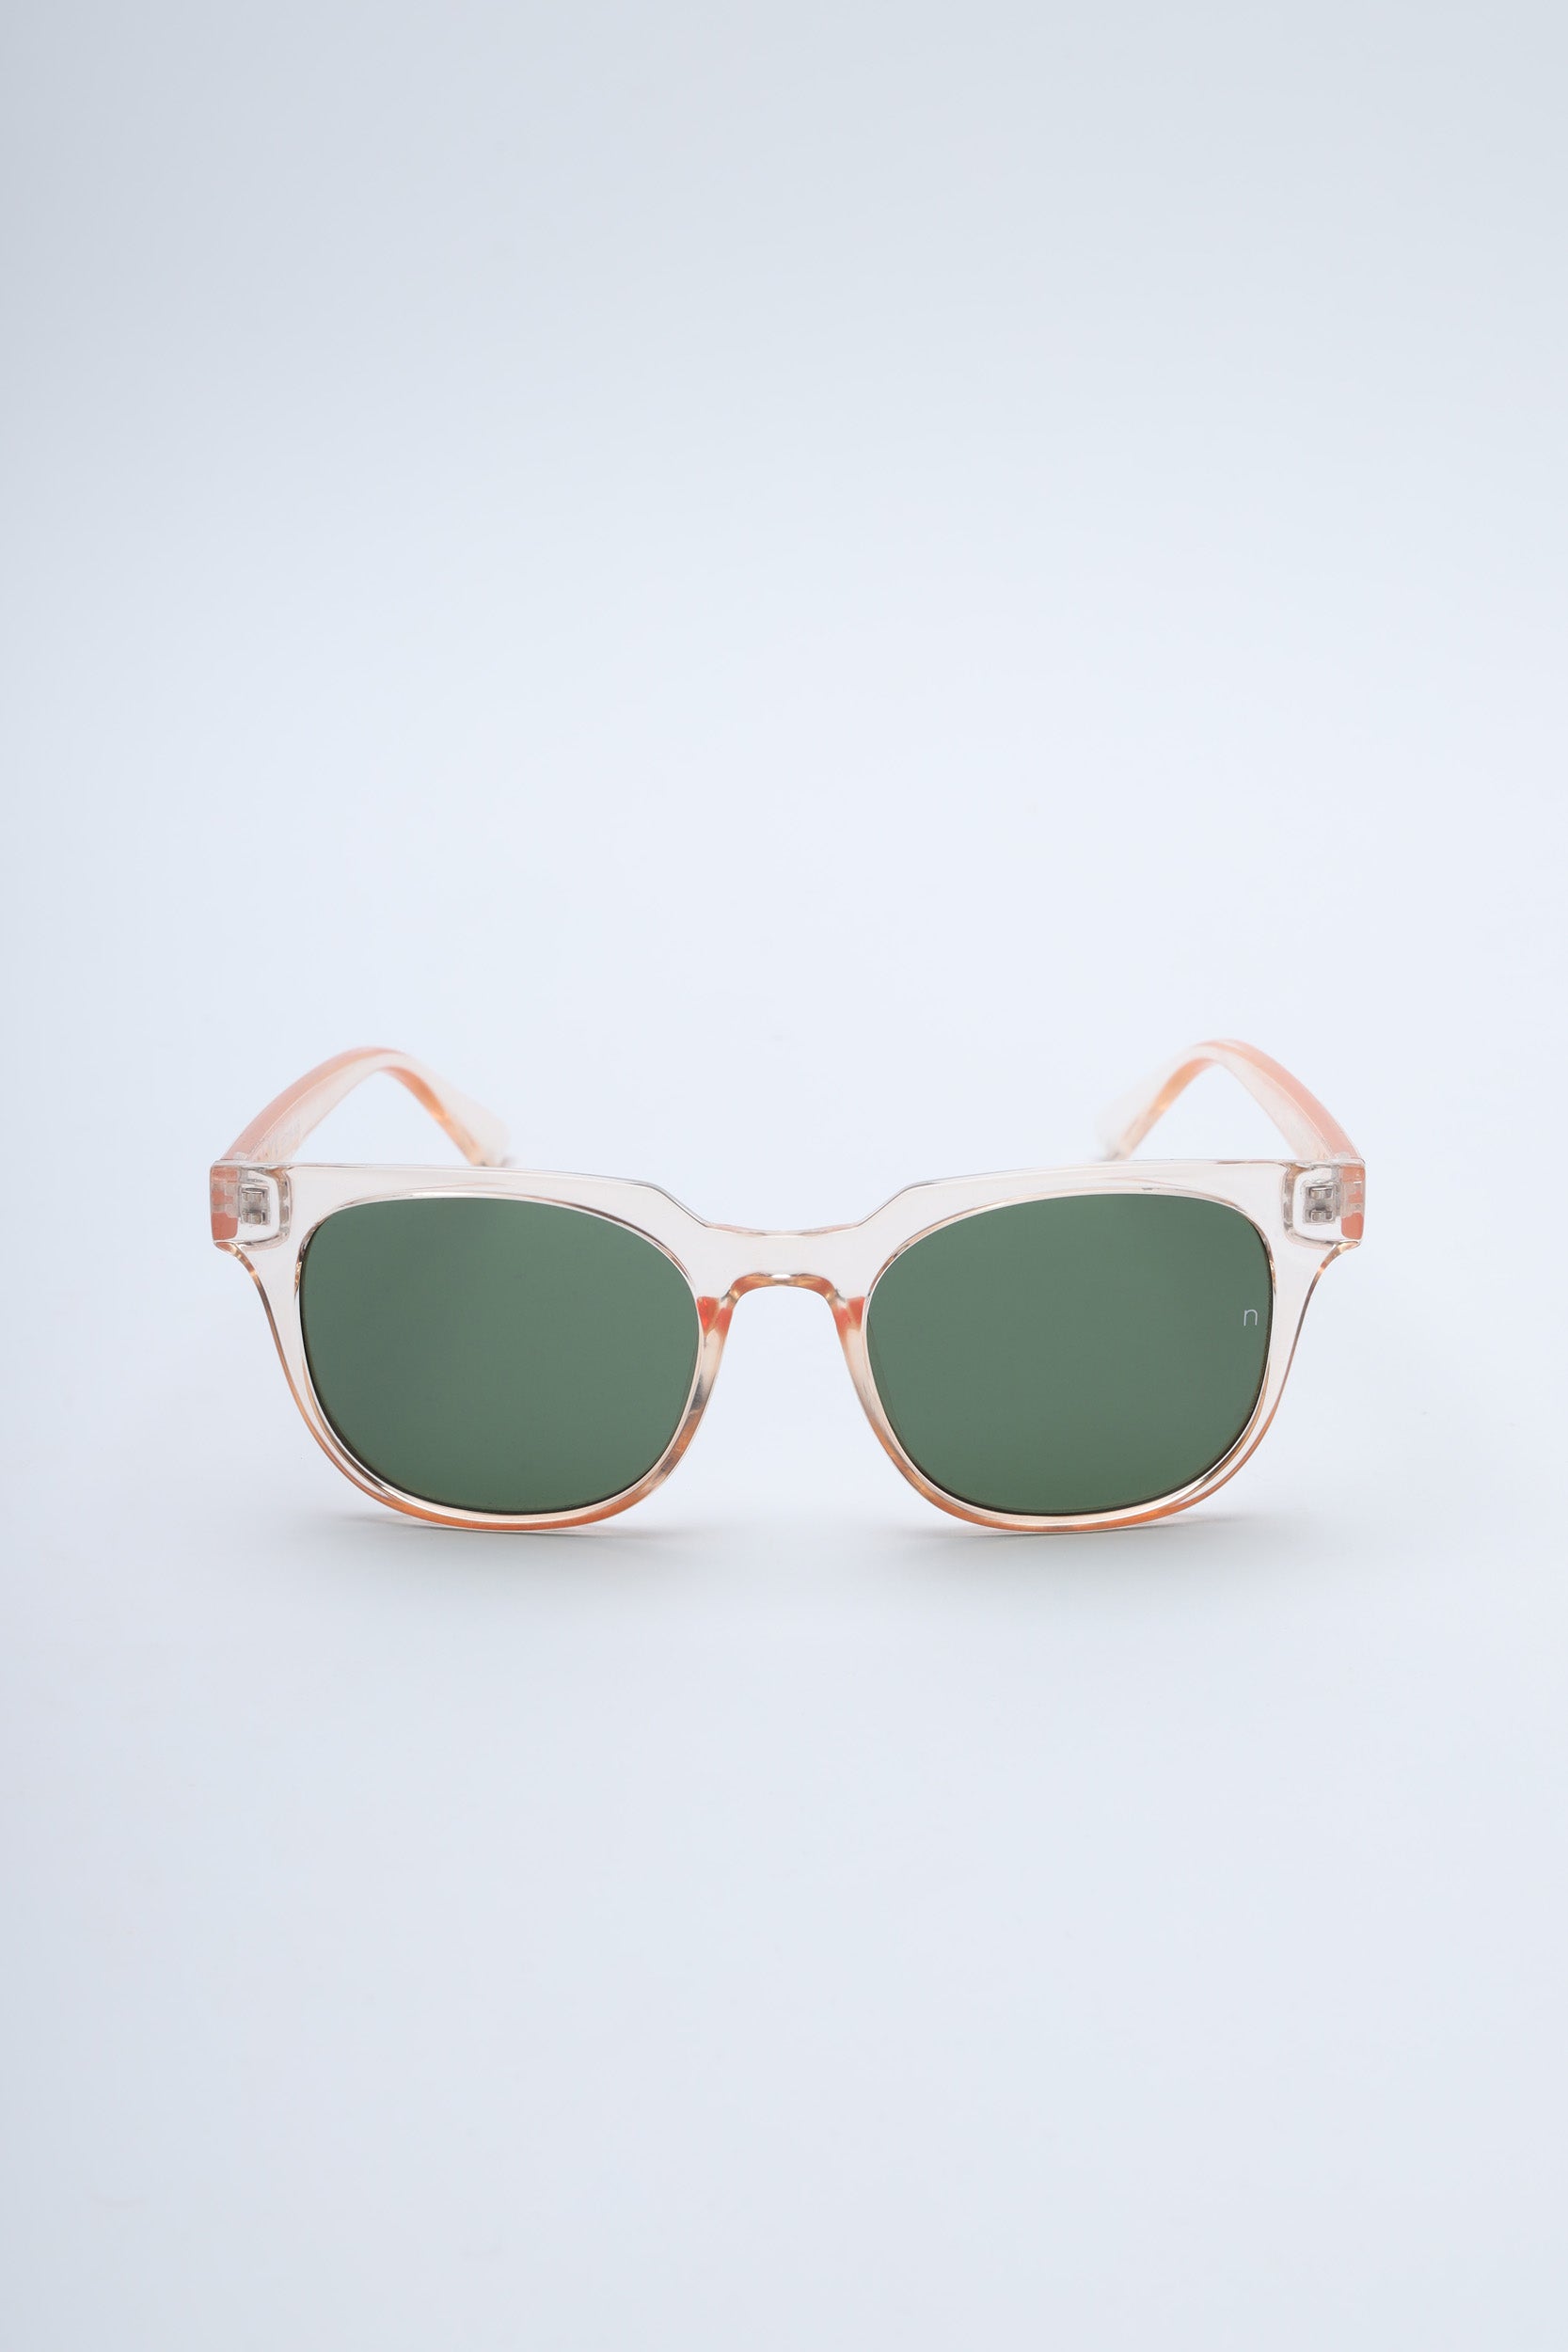 NS1005YFTGL PC Orange Frame with Green Glass Lens Sunglasses – Noggah  Sunglasses